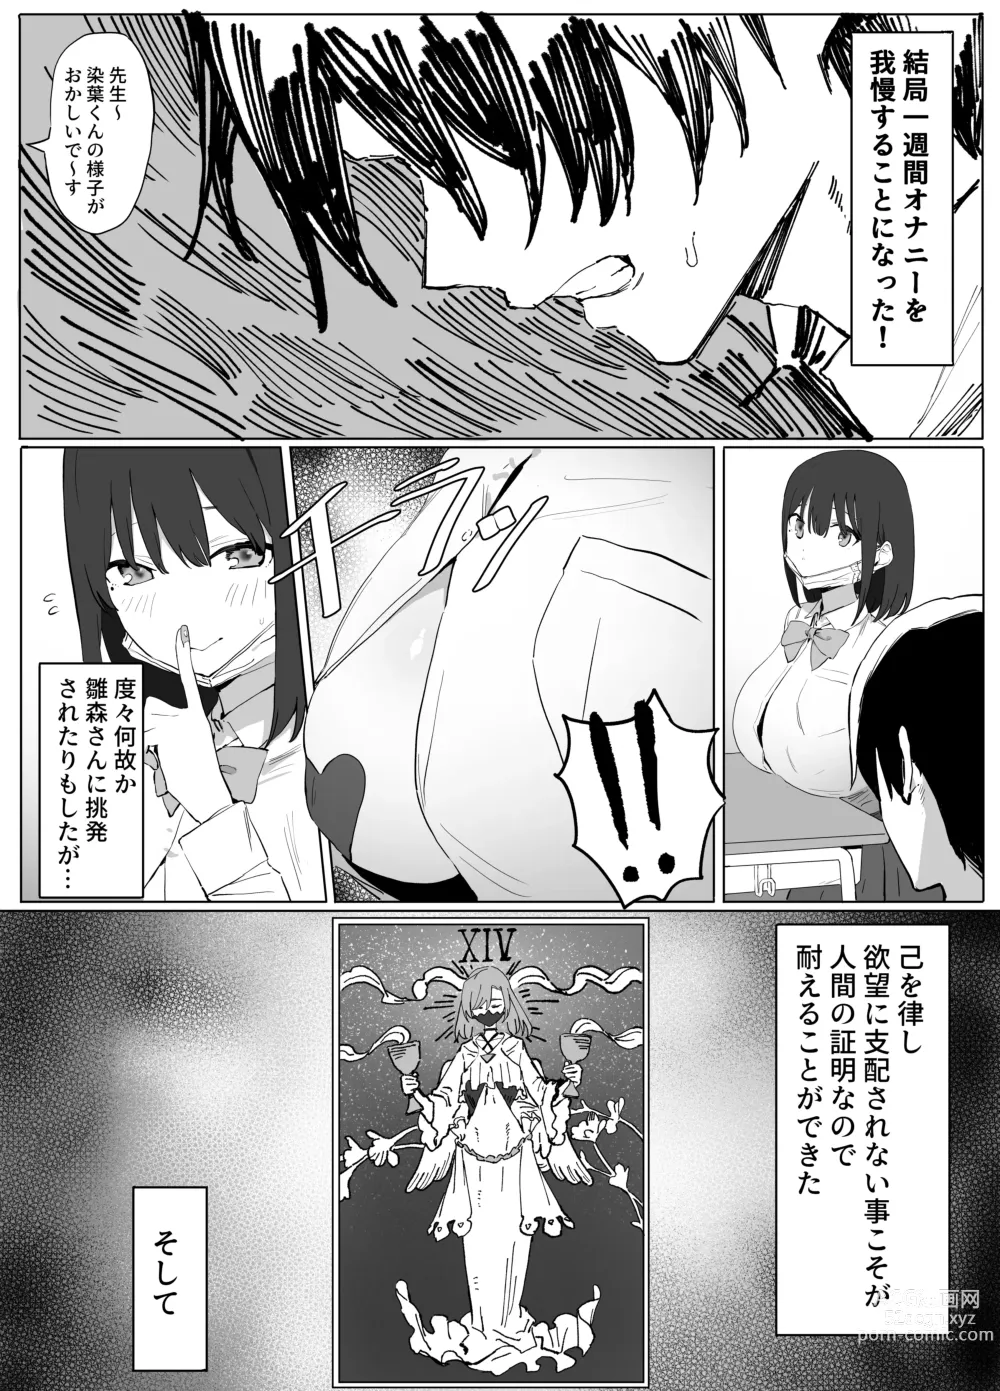 Page 14 of doujinshi Seikoui Jisshuu!